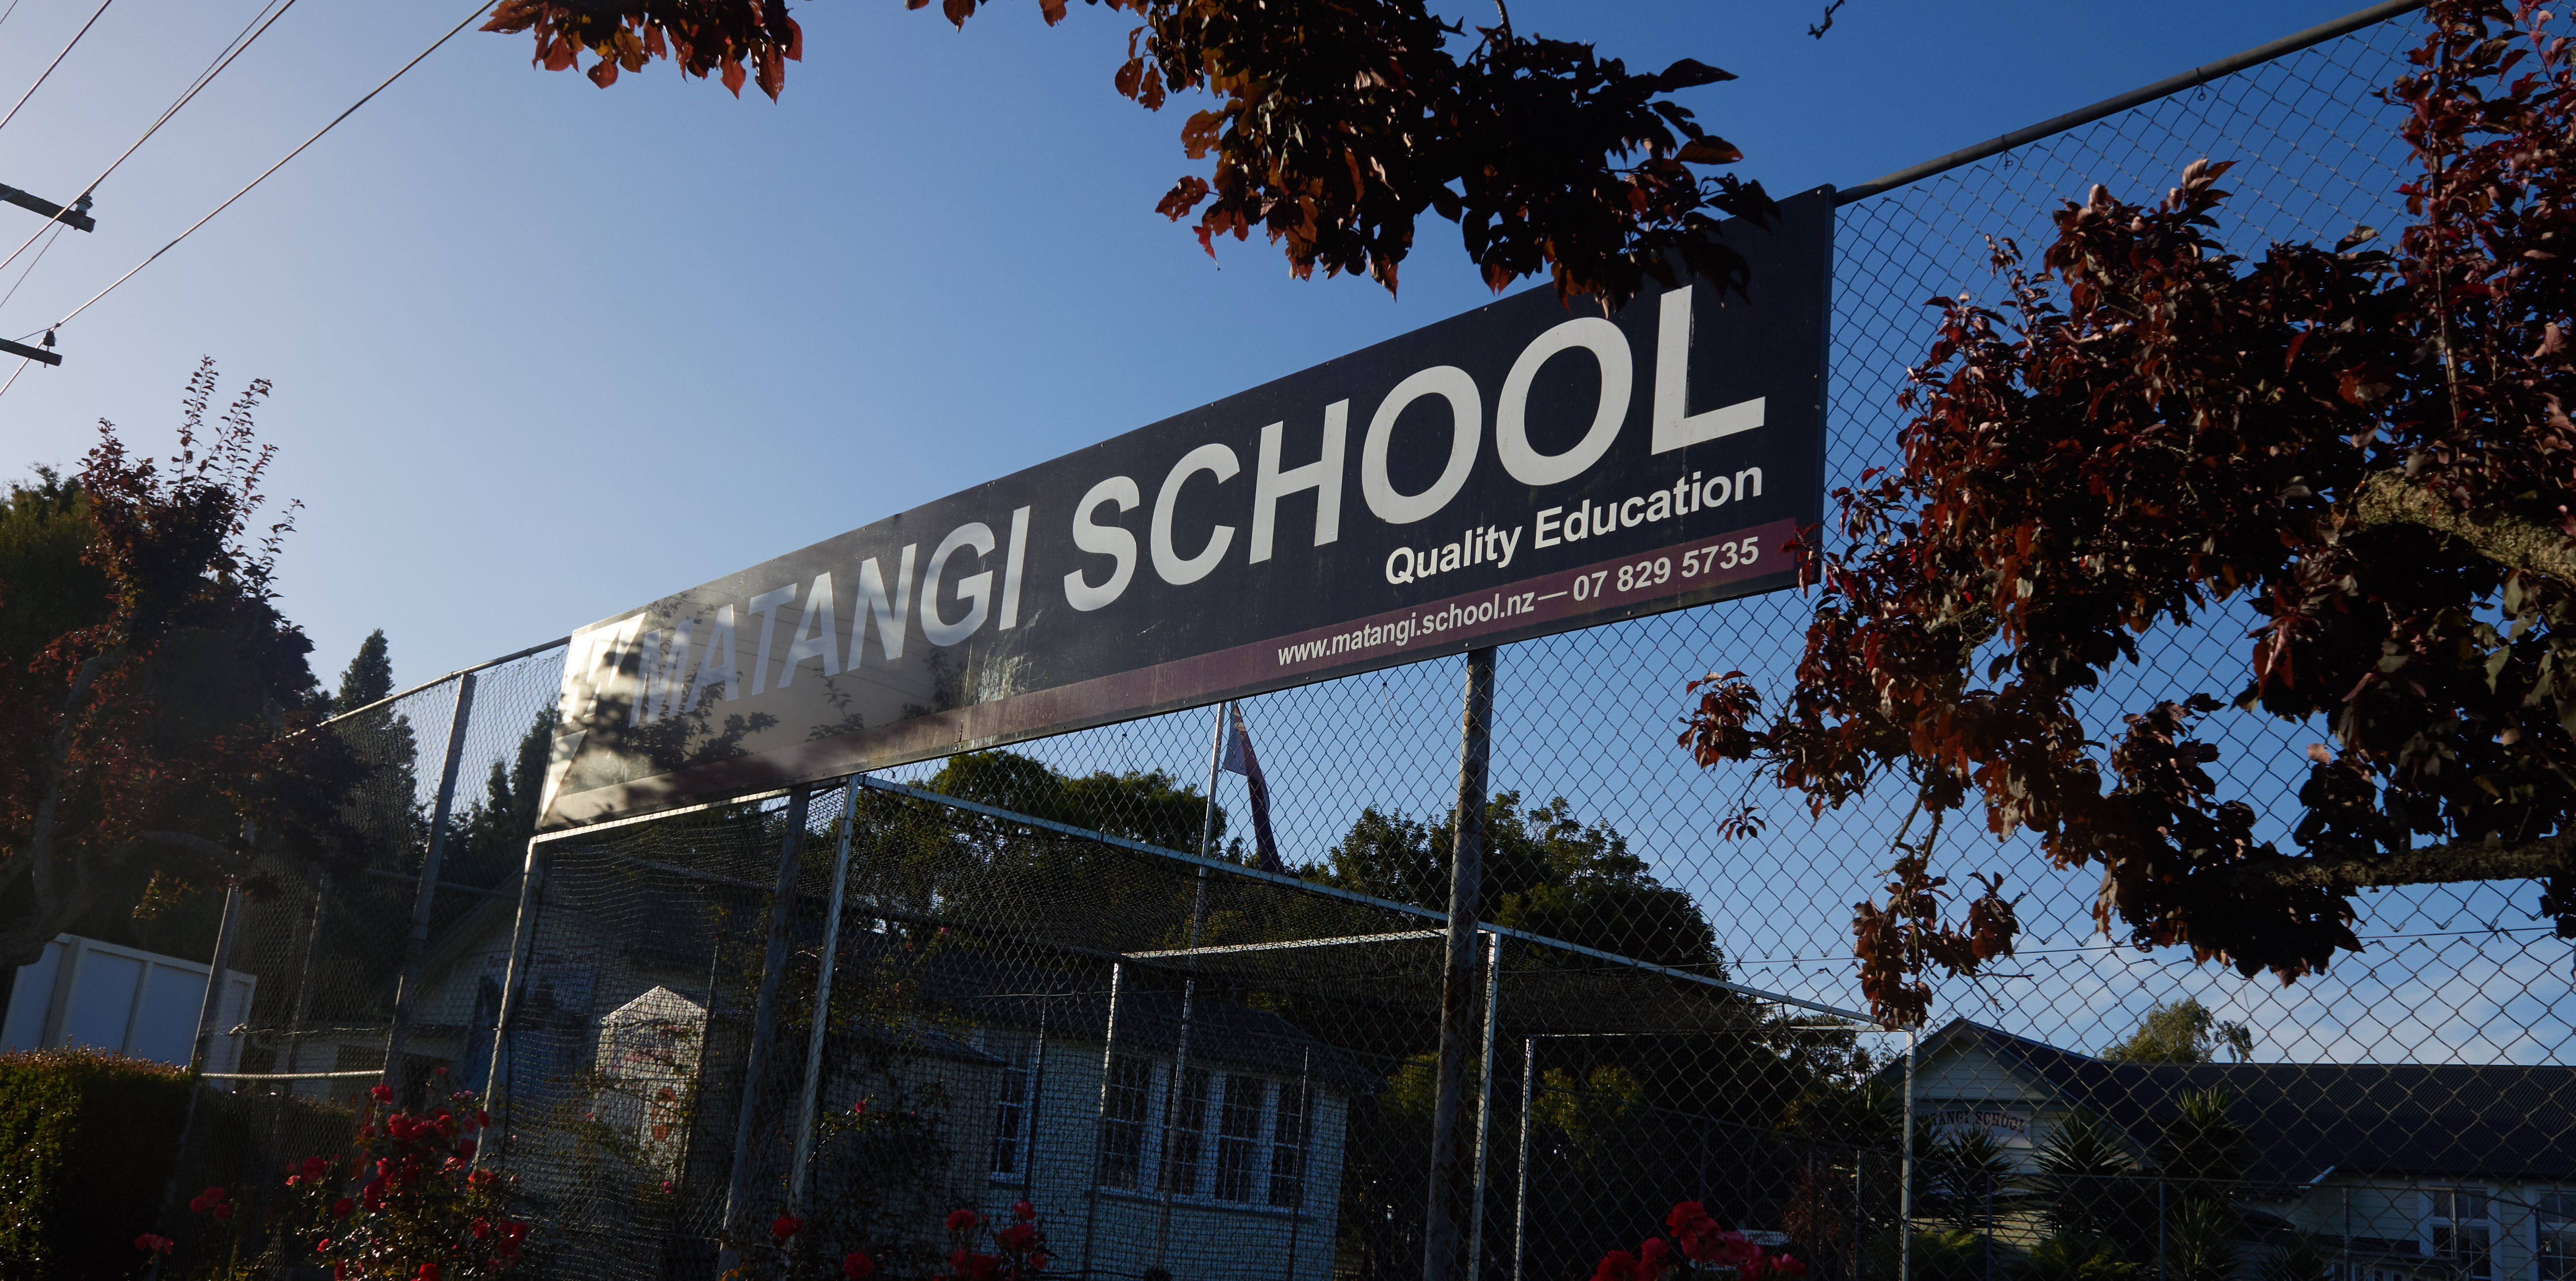 Matangi School Sign